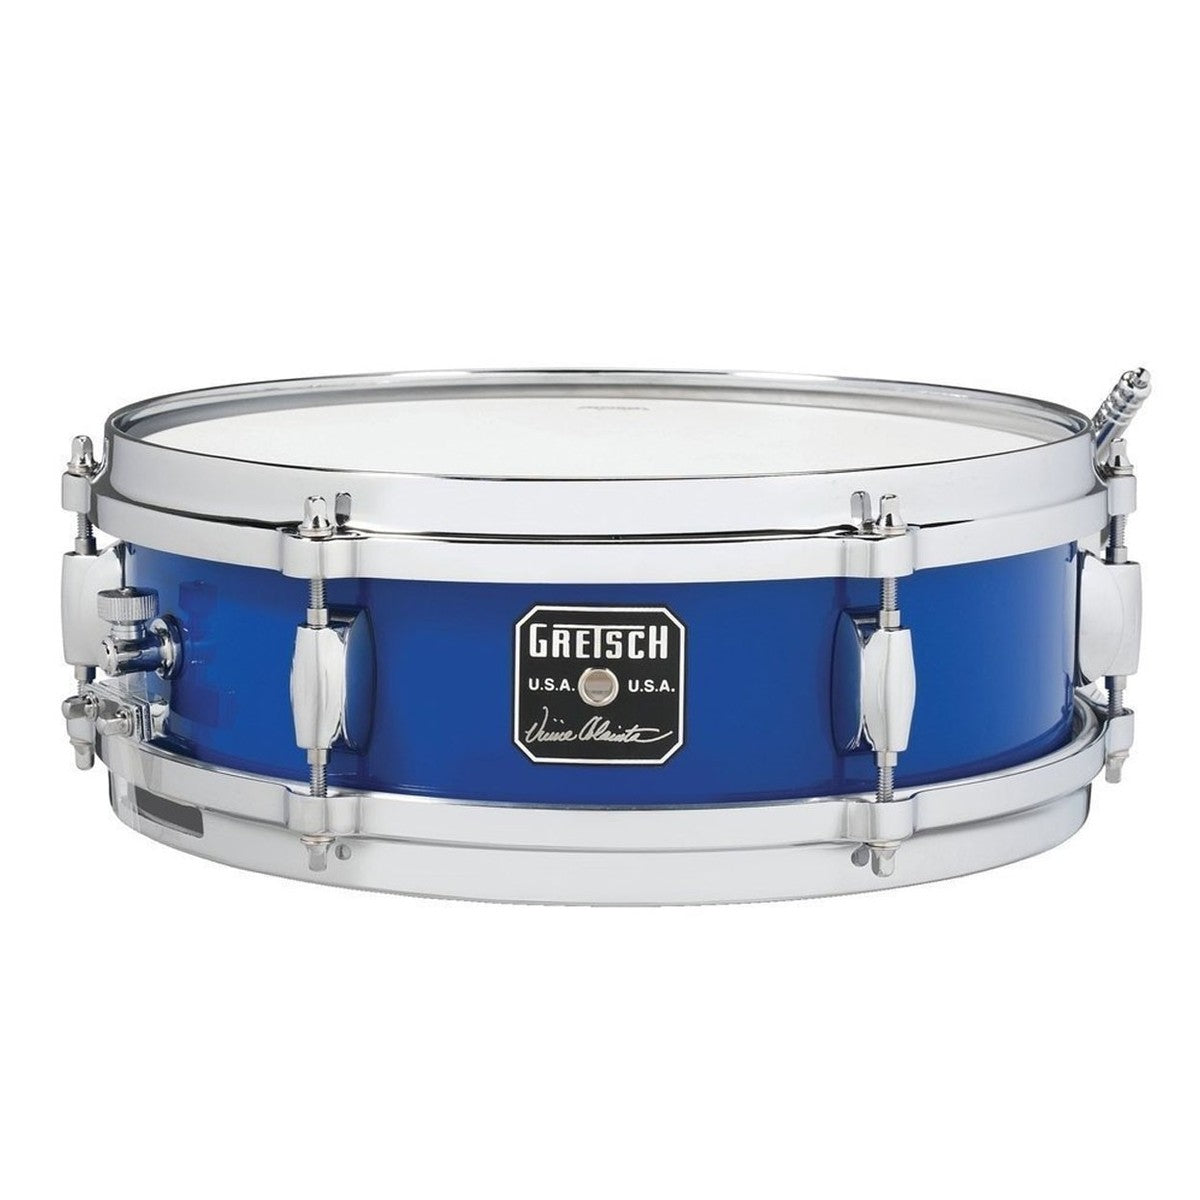 Gretsch USA Vinnie Colaiuta Signature 12"x4" Snare Drum in Cobalt Blue Gloss